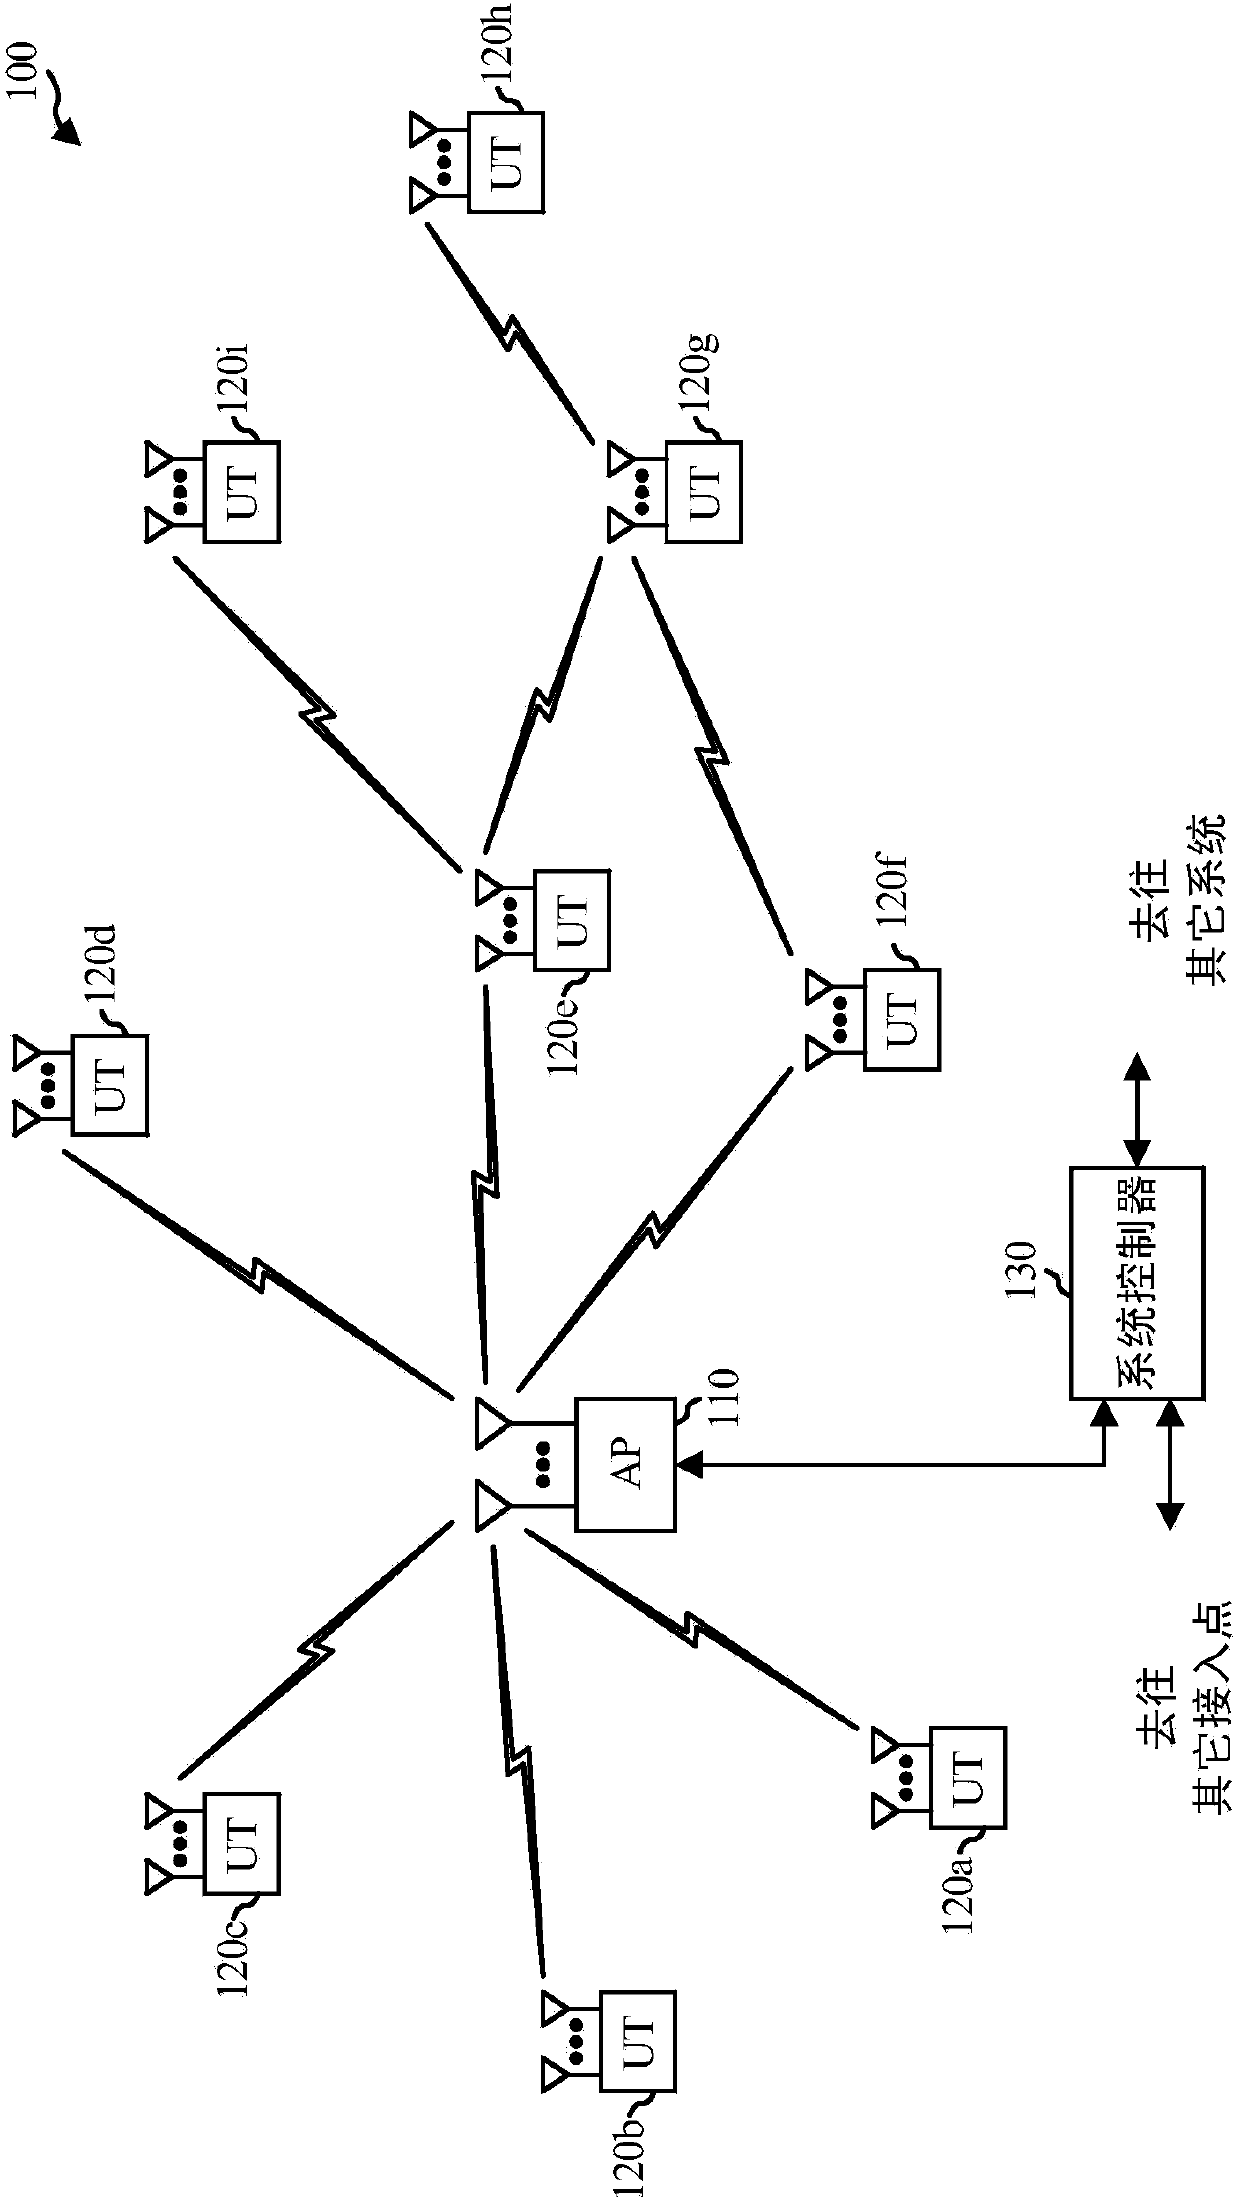 Station-centric multi-user multiple input multiple output (MU-MIMO)